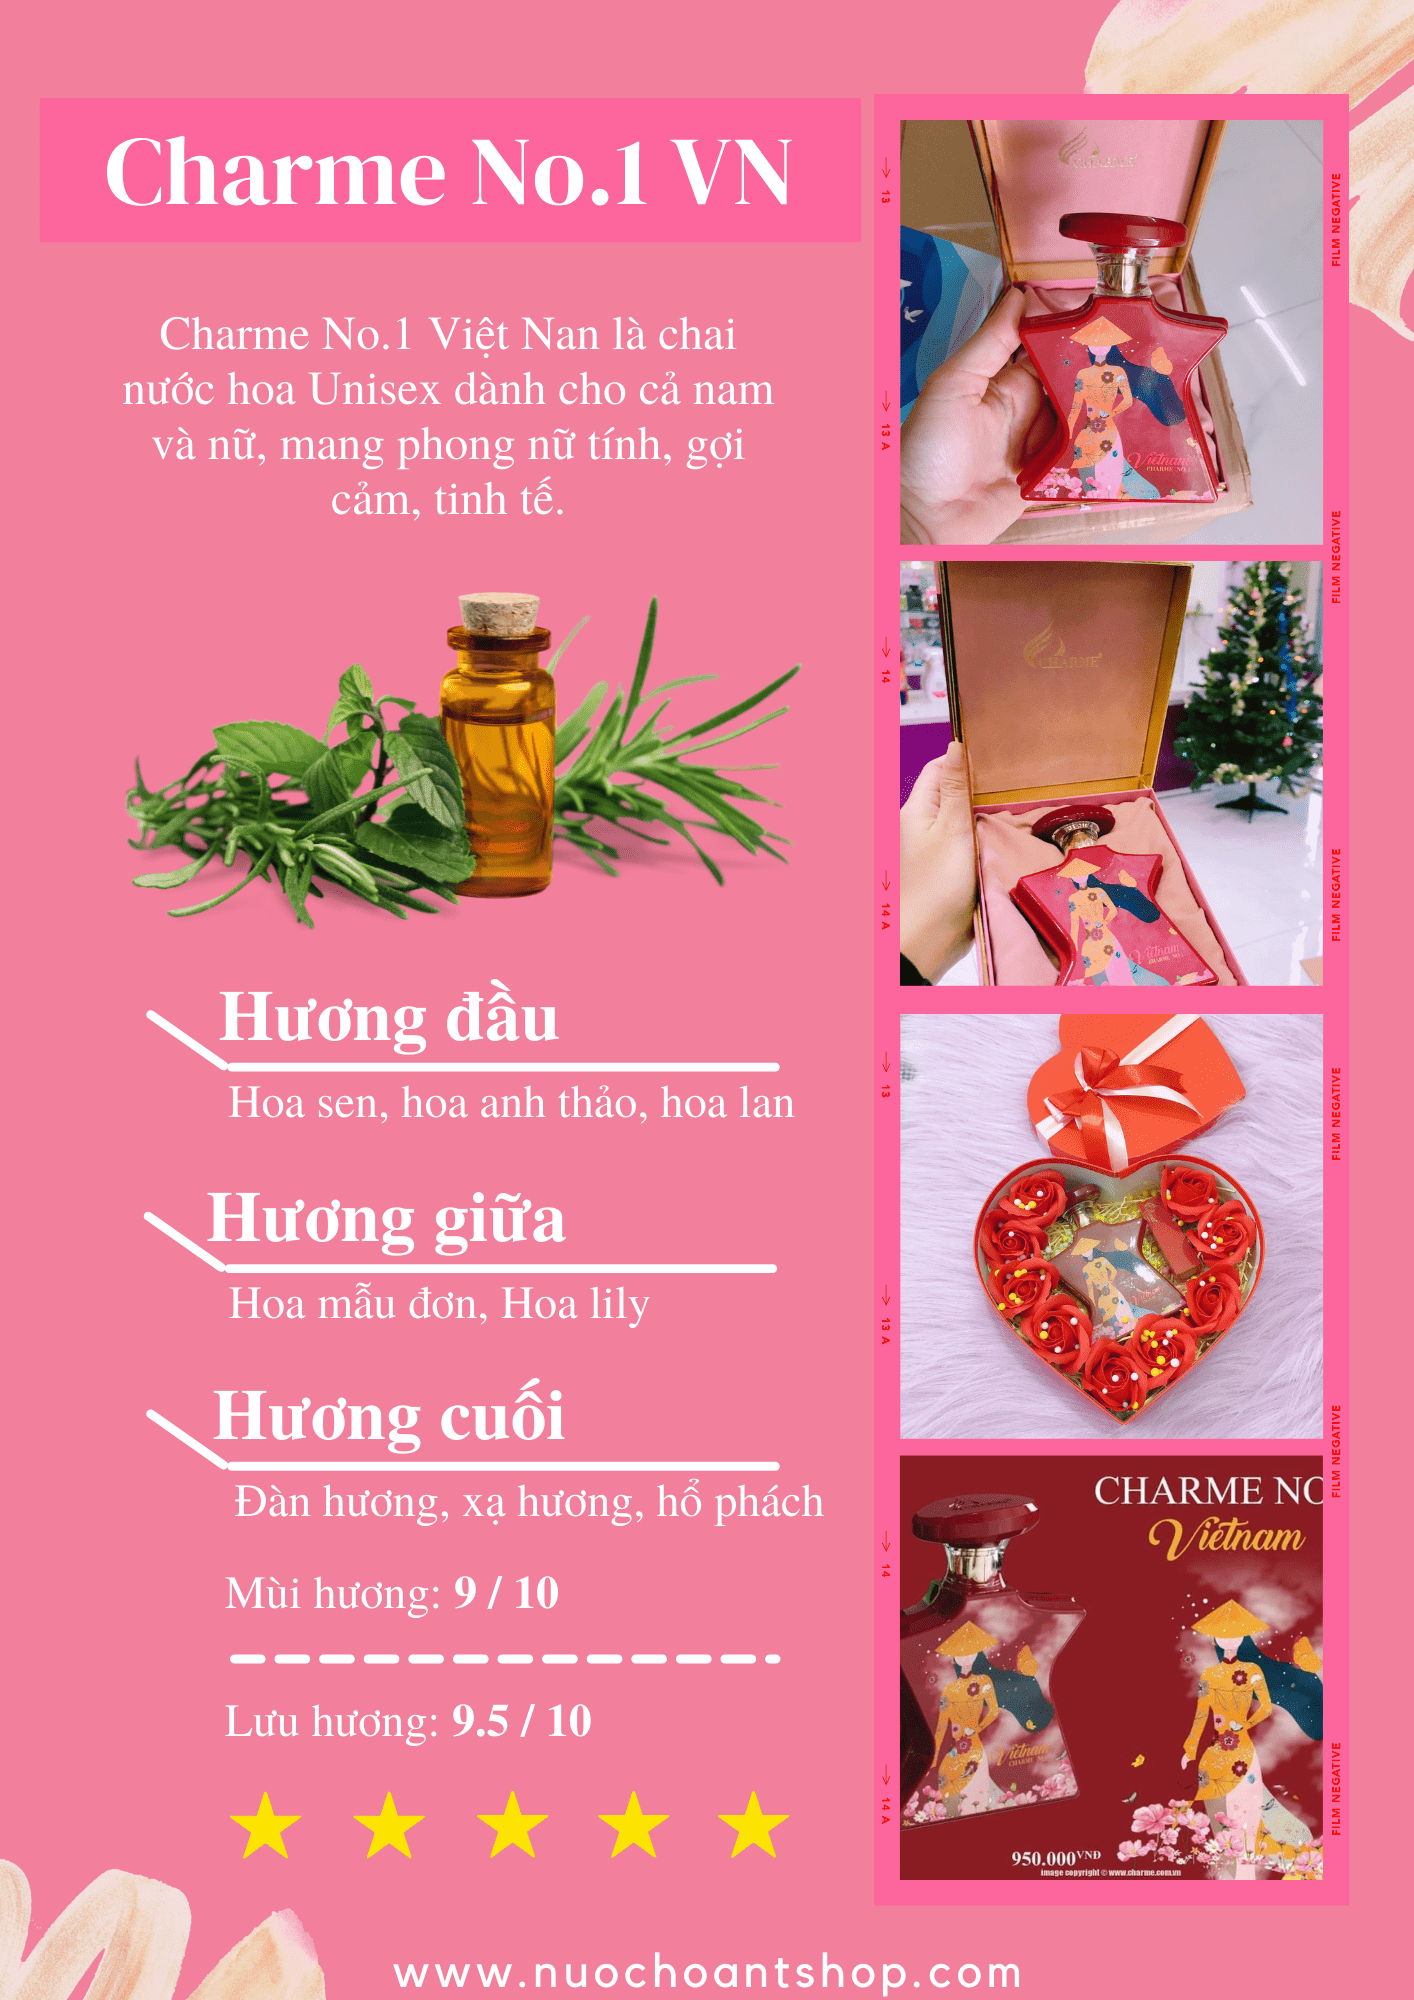 Review nước hoa Charme No.1 Việt Nam